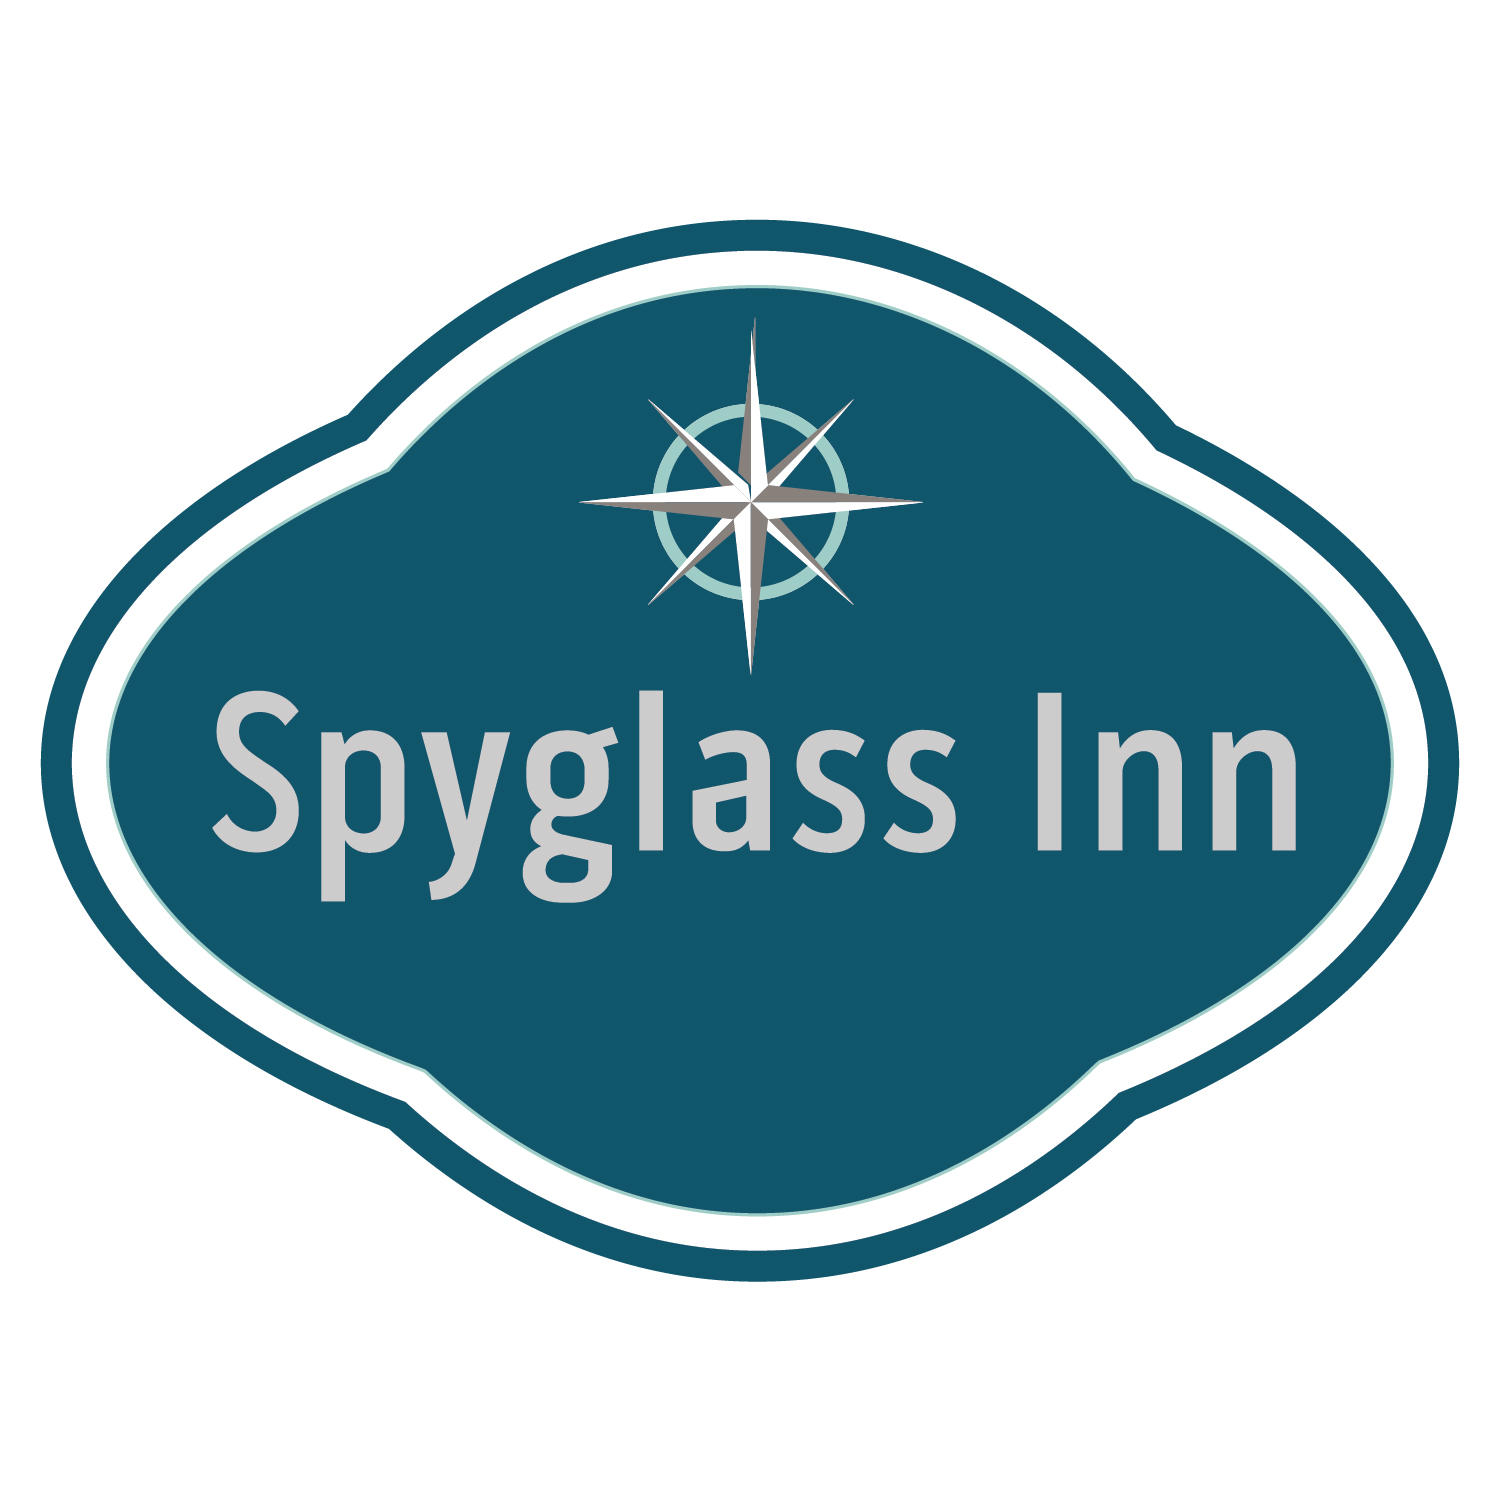 Spyglass Inn Logo